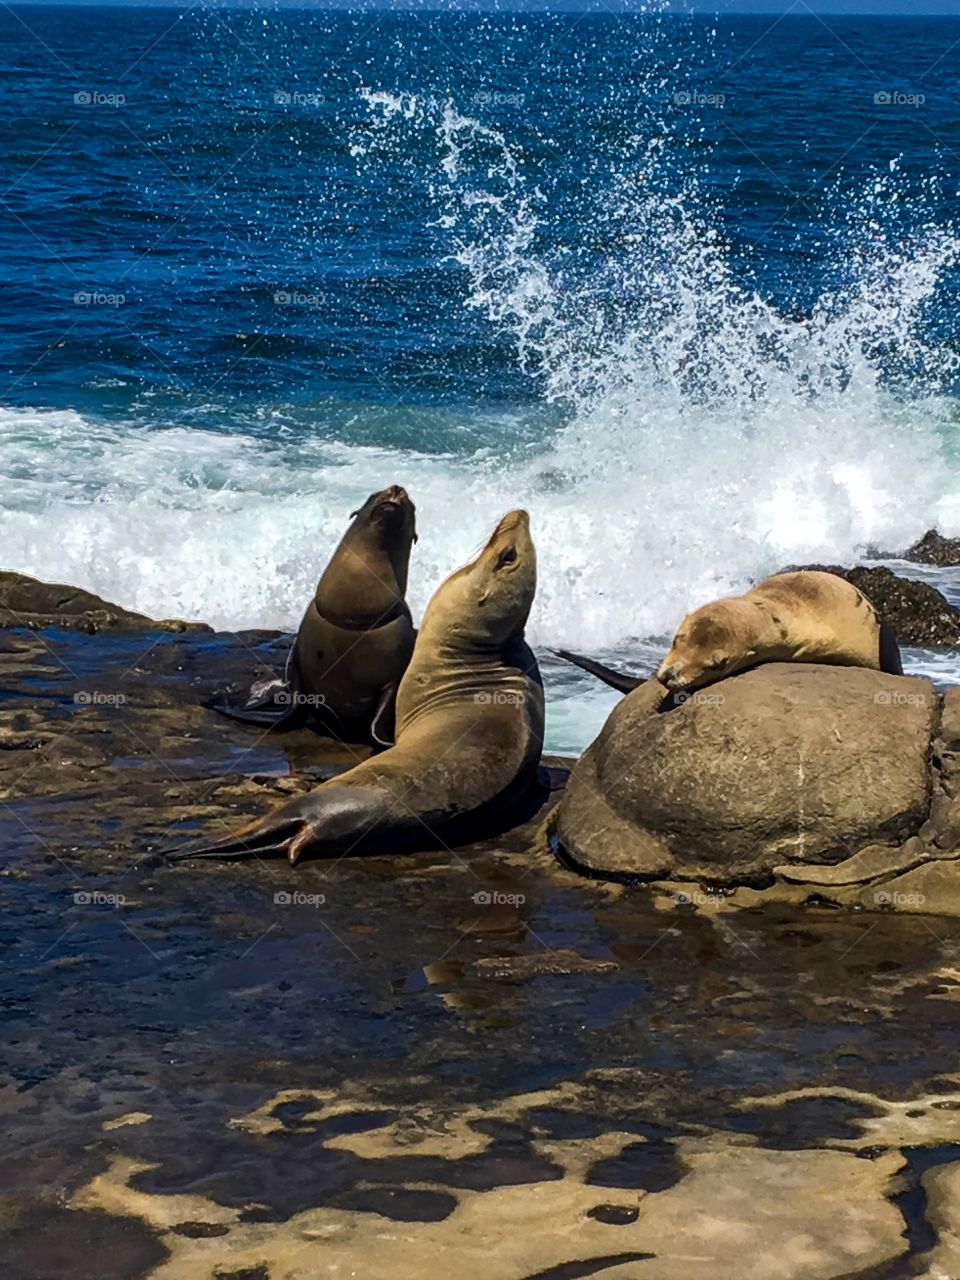 Sea lion resting on beach rocks